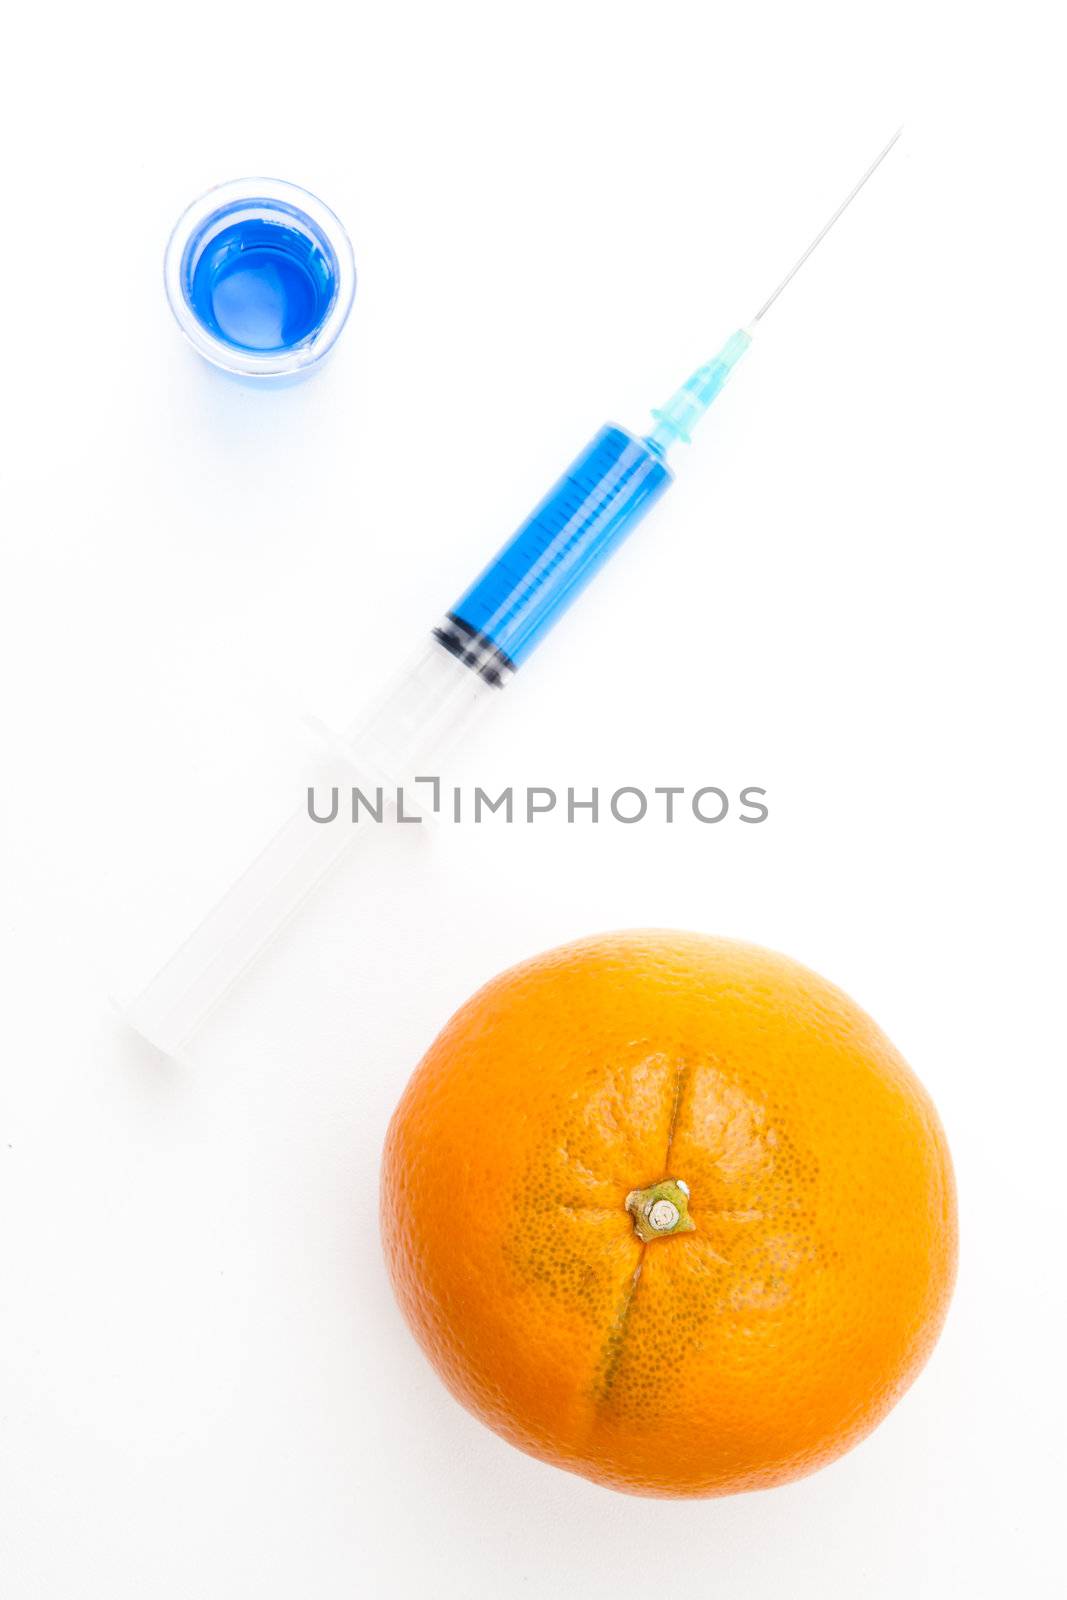  Syringe between a beaker and an orange by Wavebreakmedia